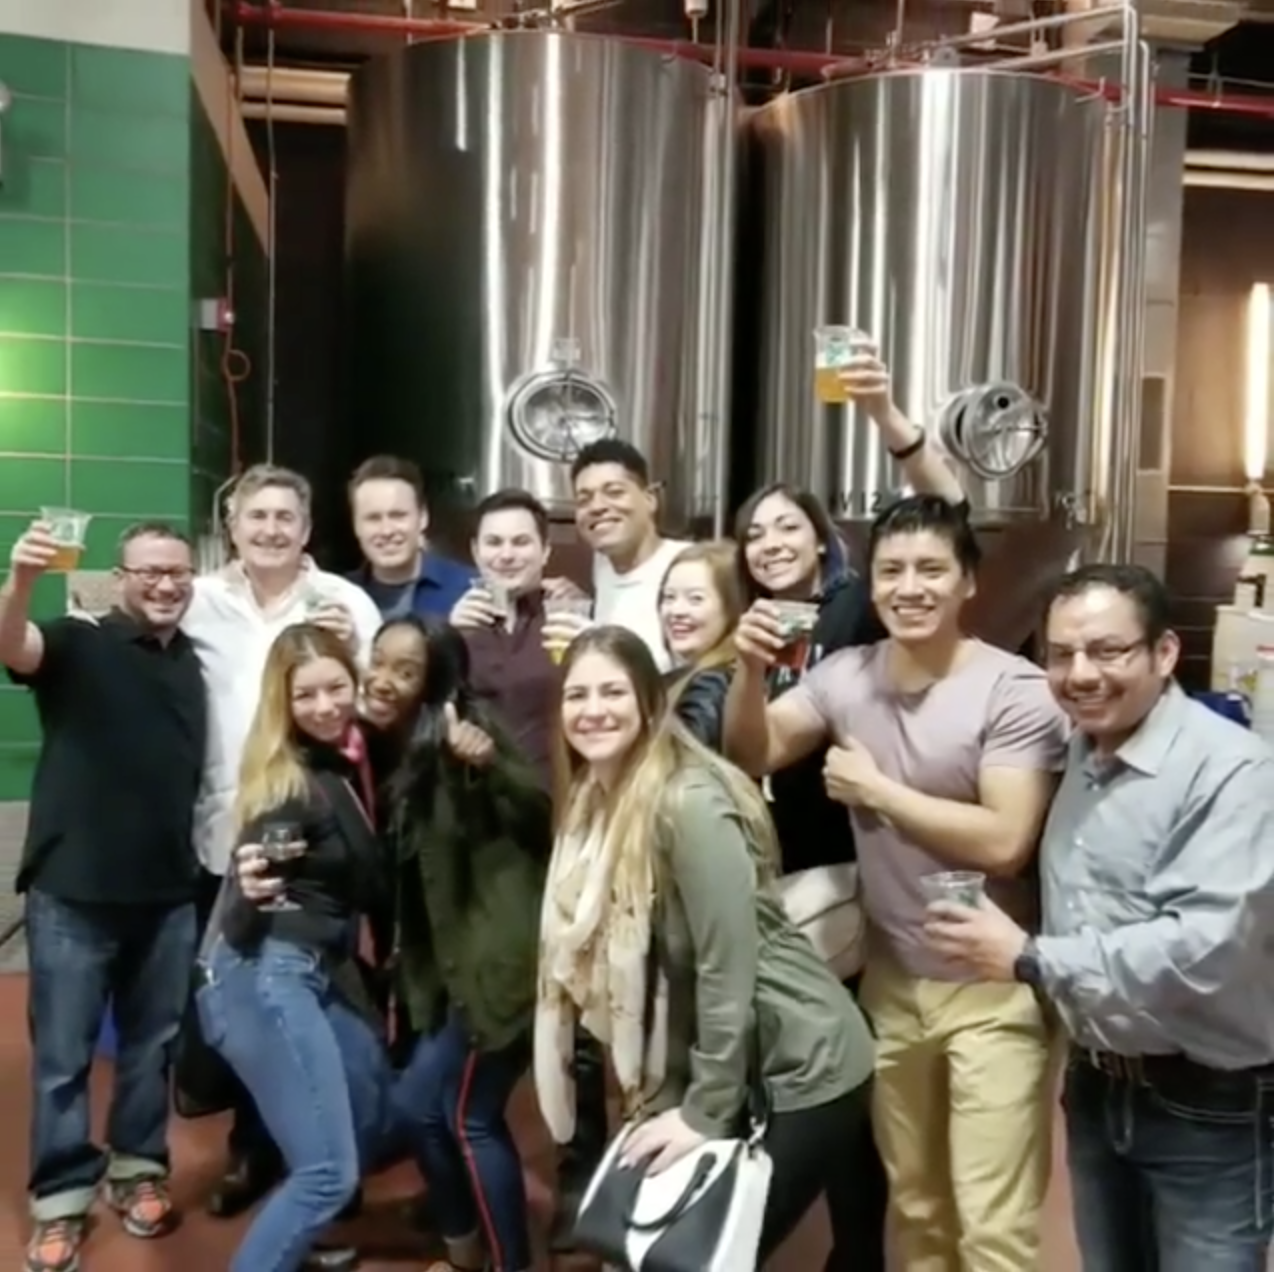 Smokehouse Staff VisitsThe Brooklyn Brewery!